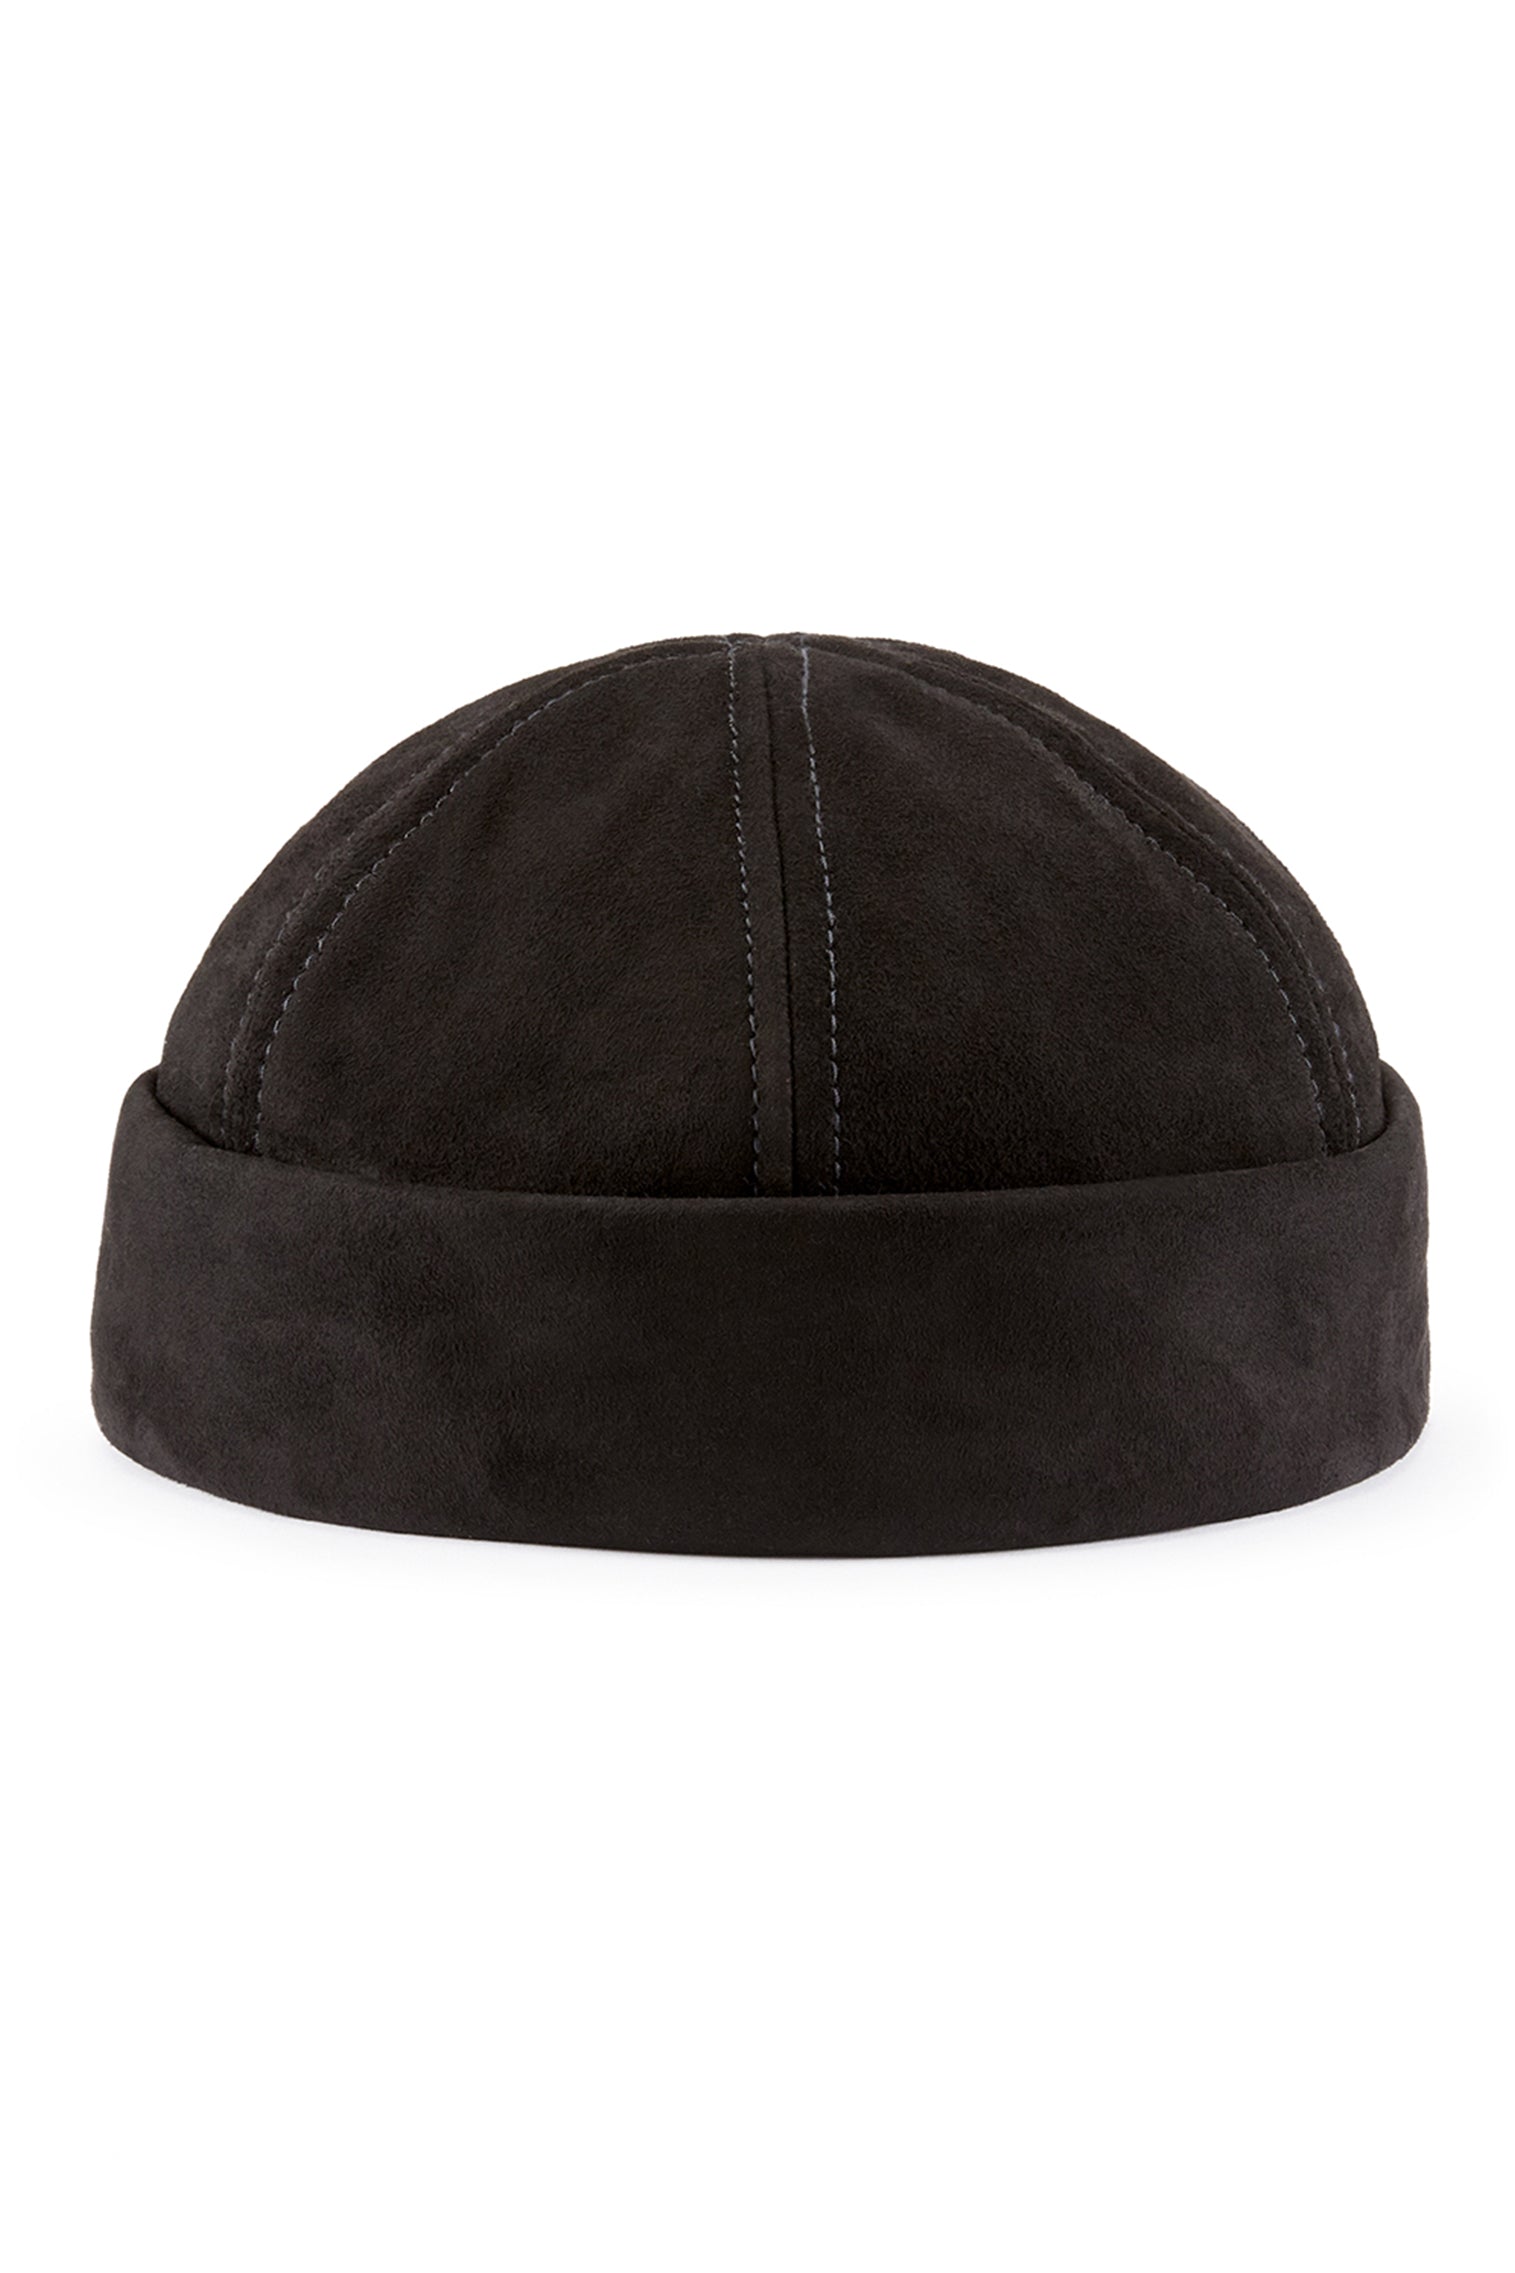 Dover Black Leather Watch Cap - Men's Hats - Lock & Co. Hatters London UK